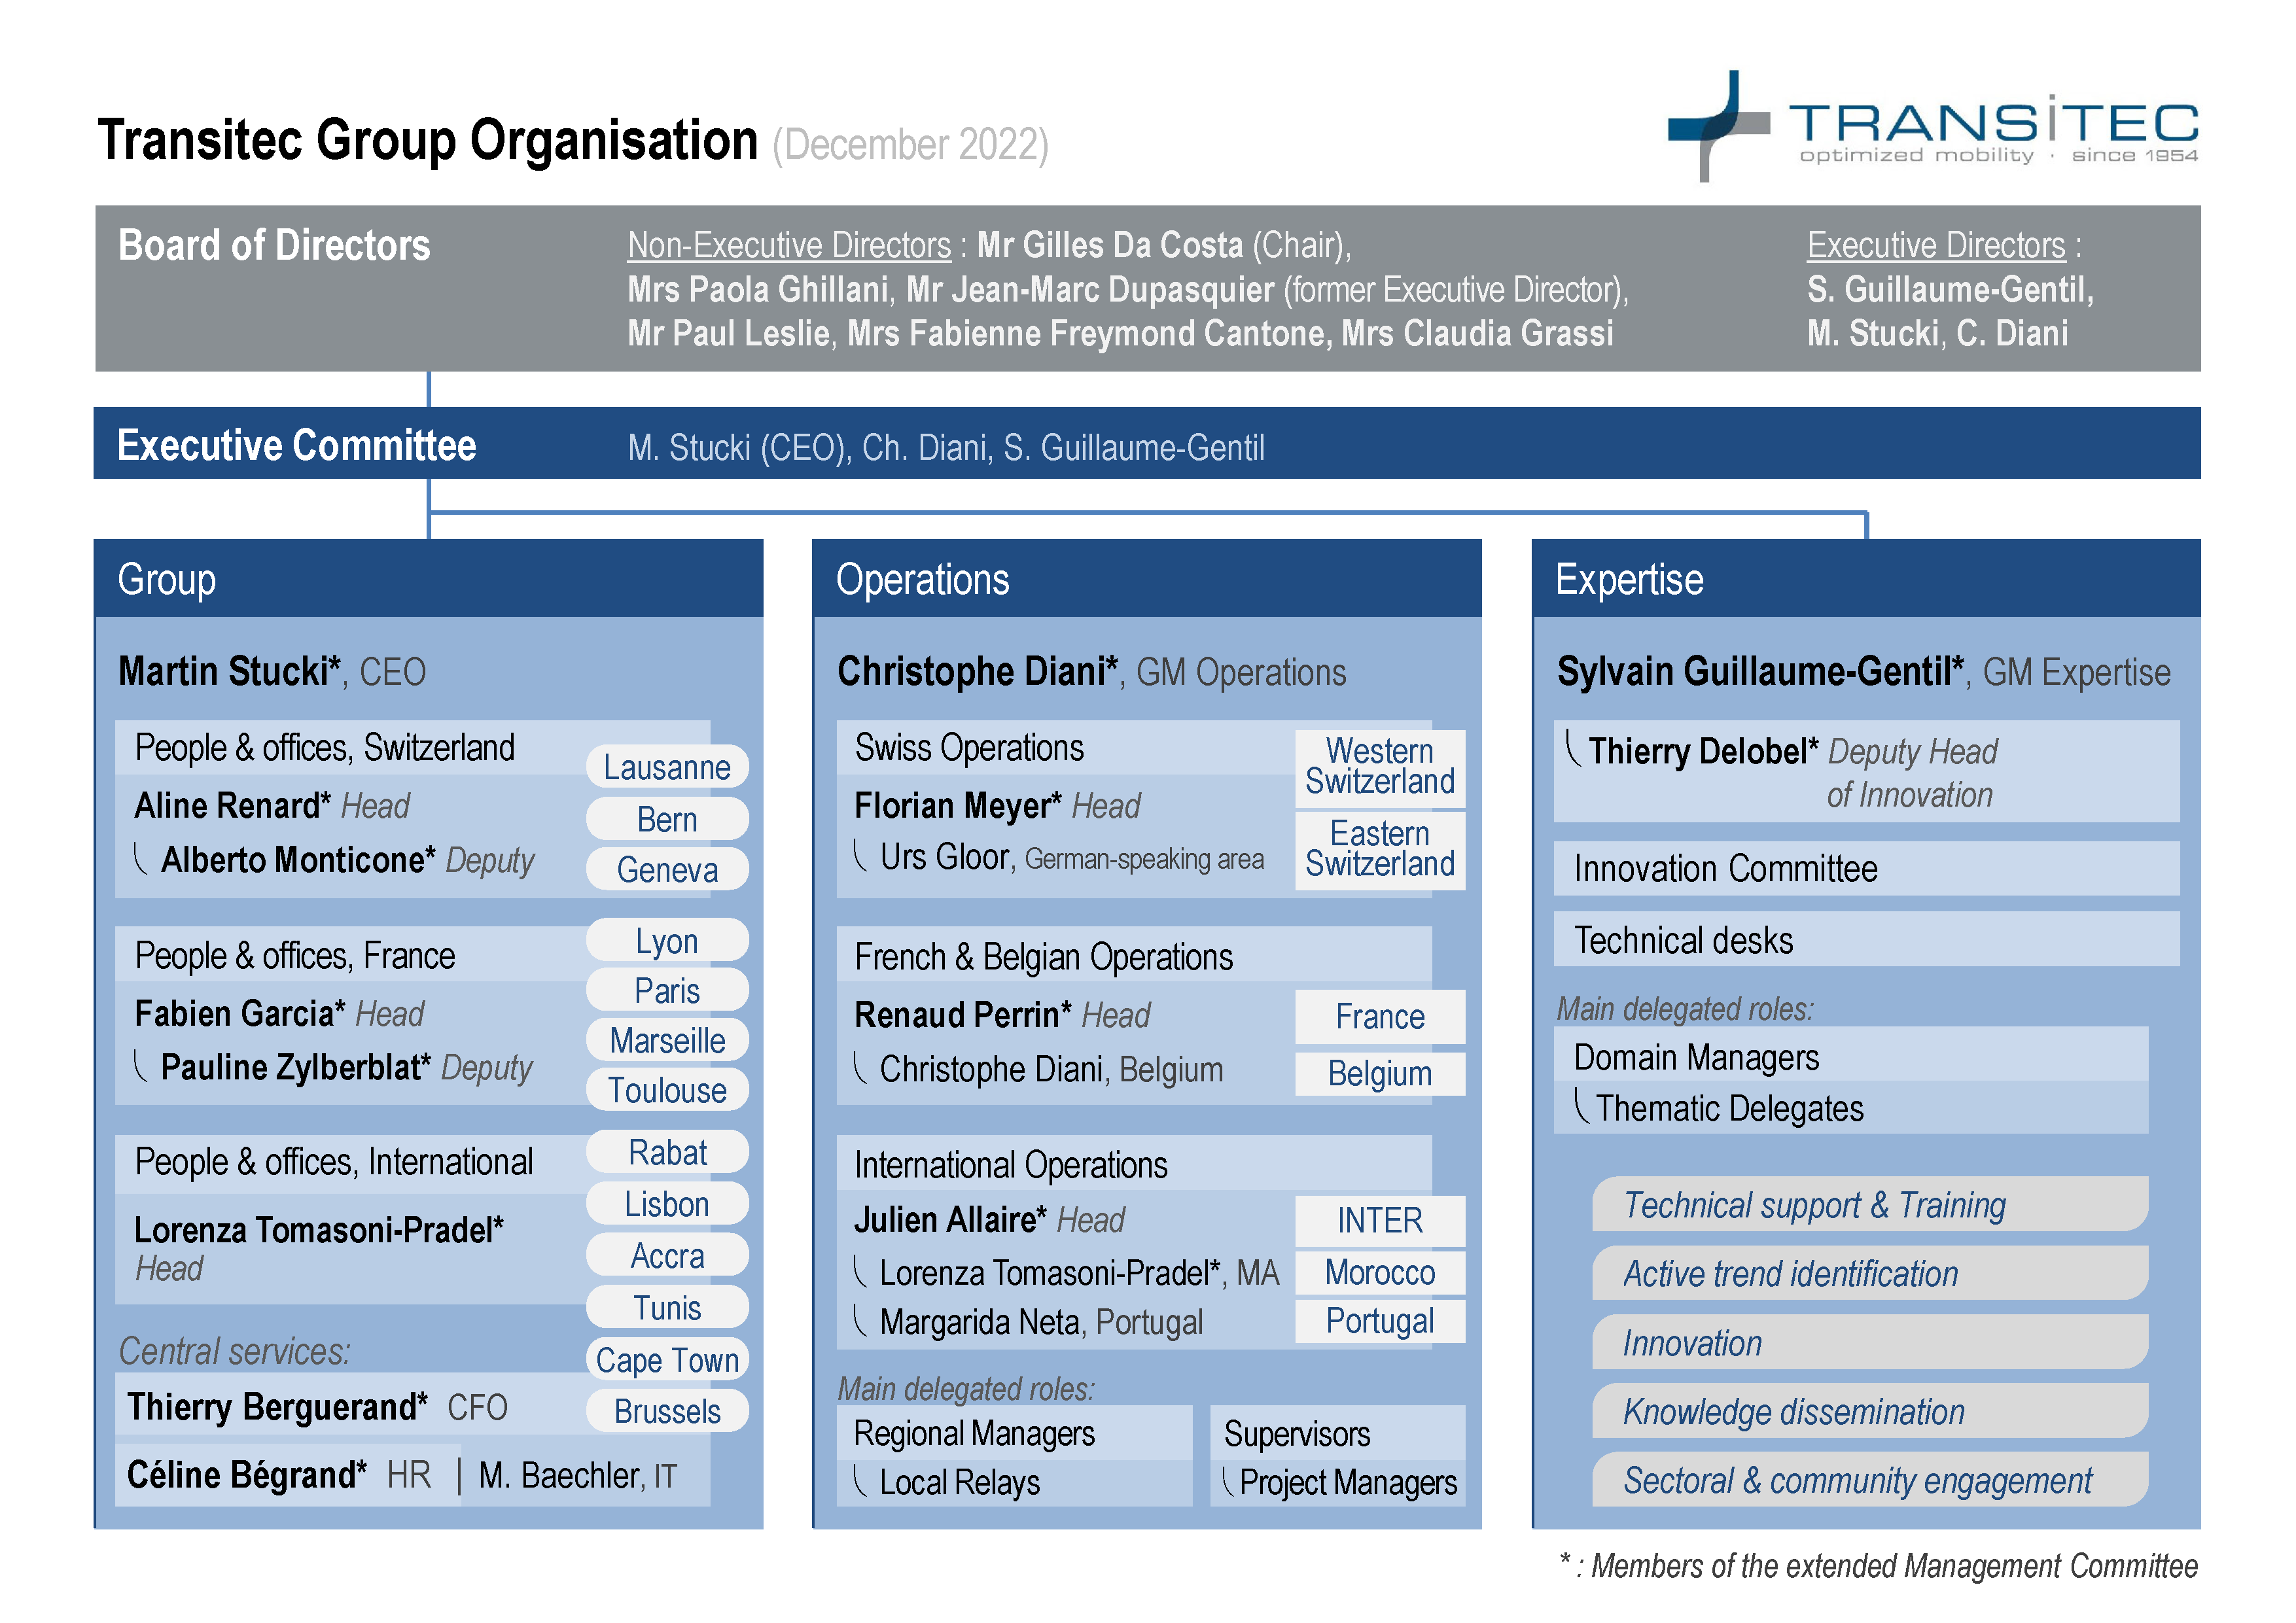 A0 5 Organigramme Transitec 2022 12 eng